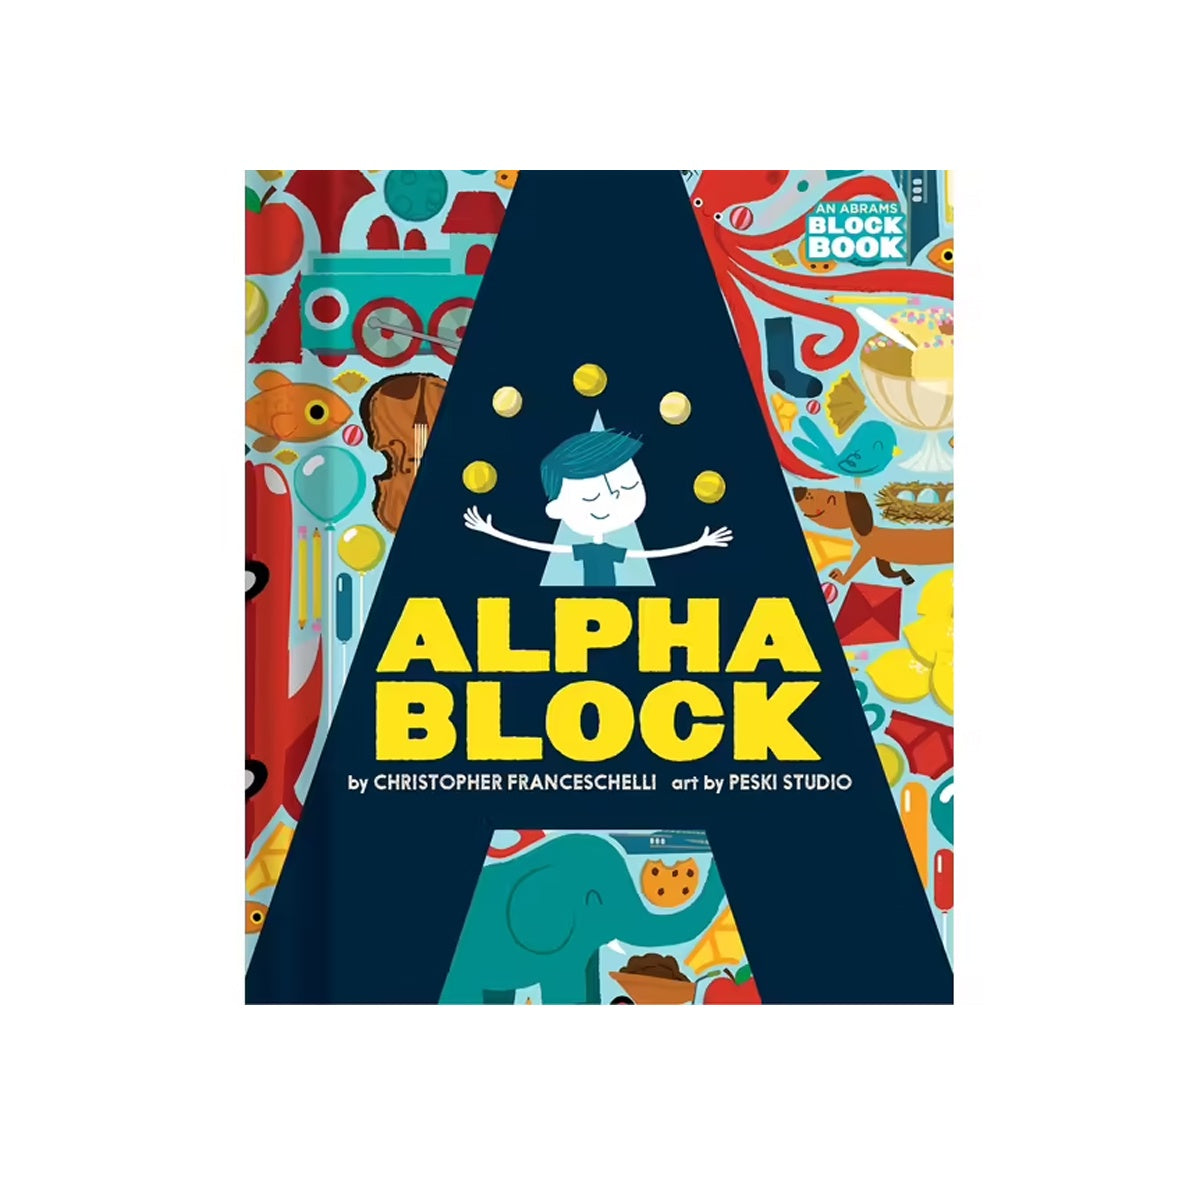 Alphablock